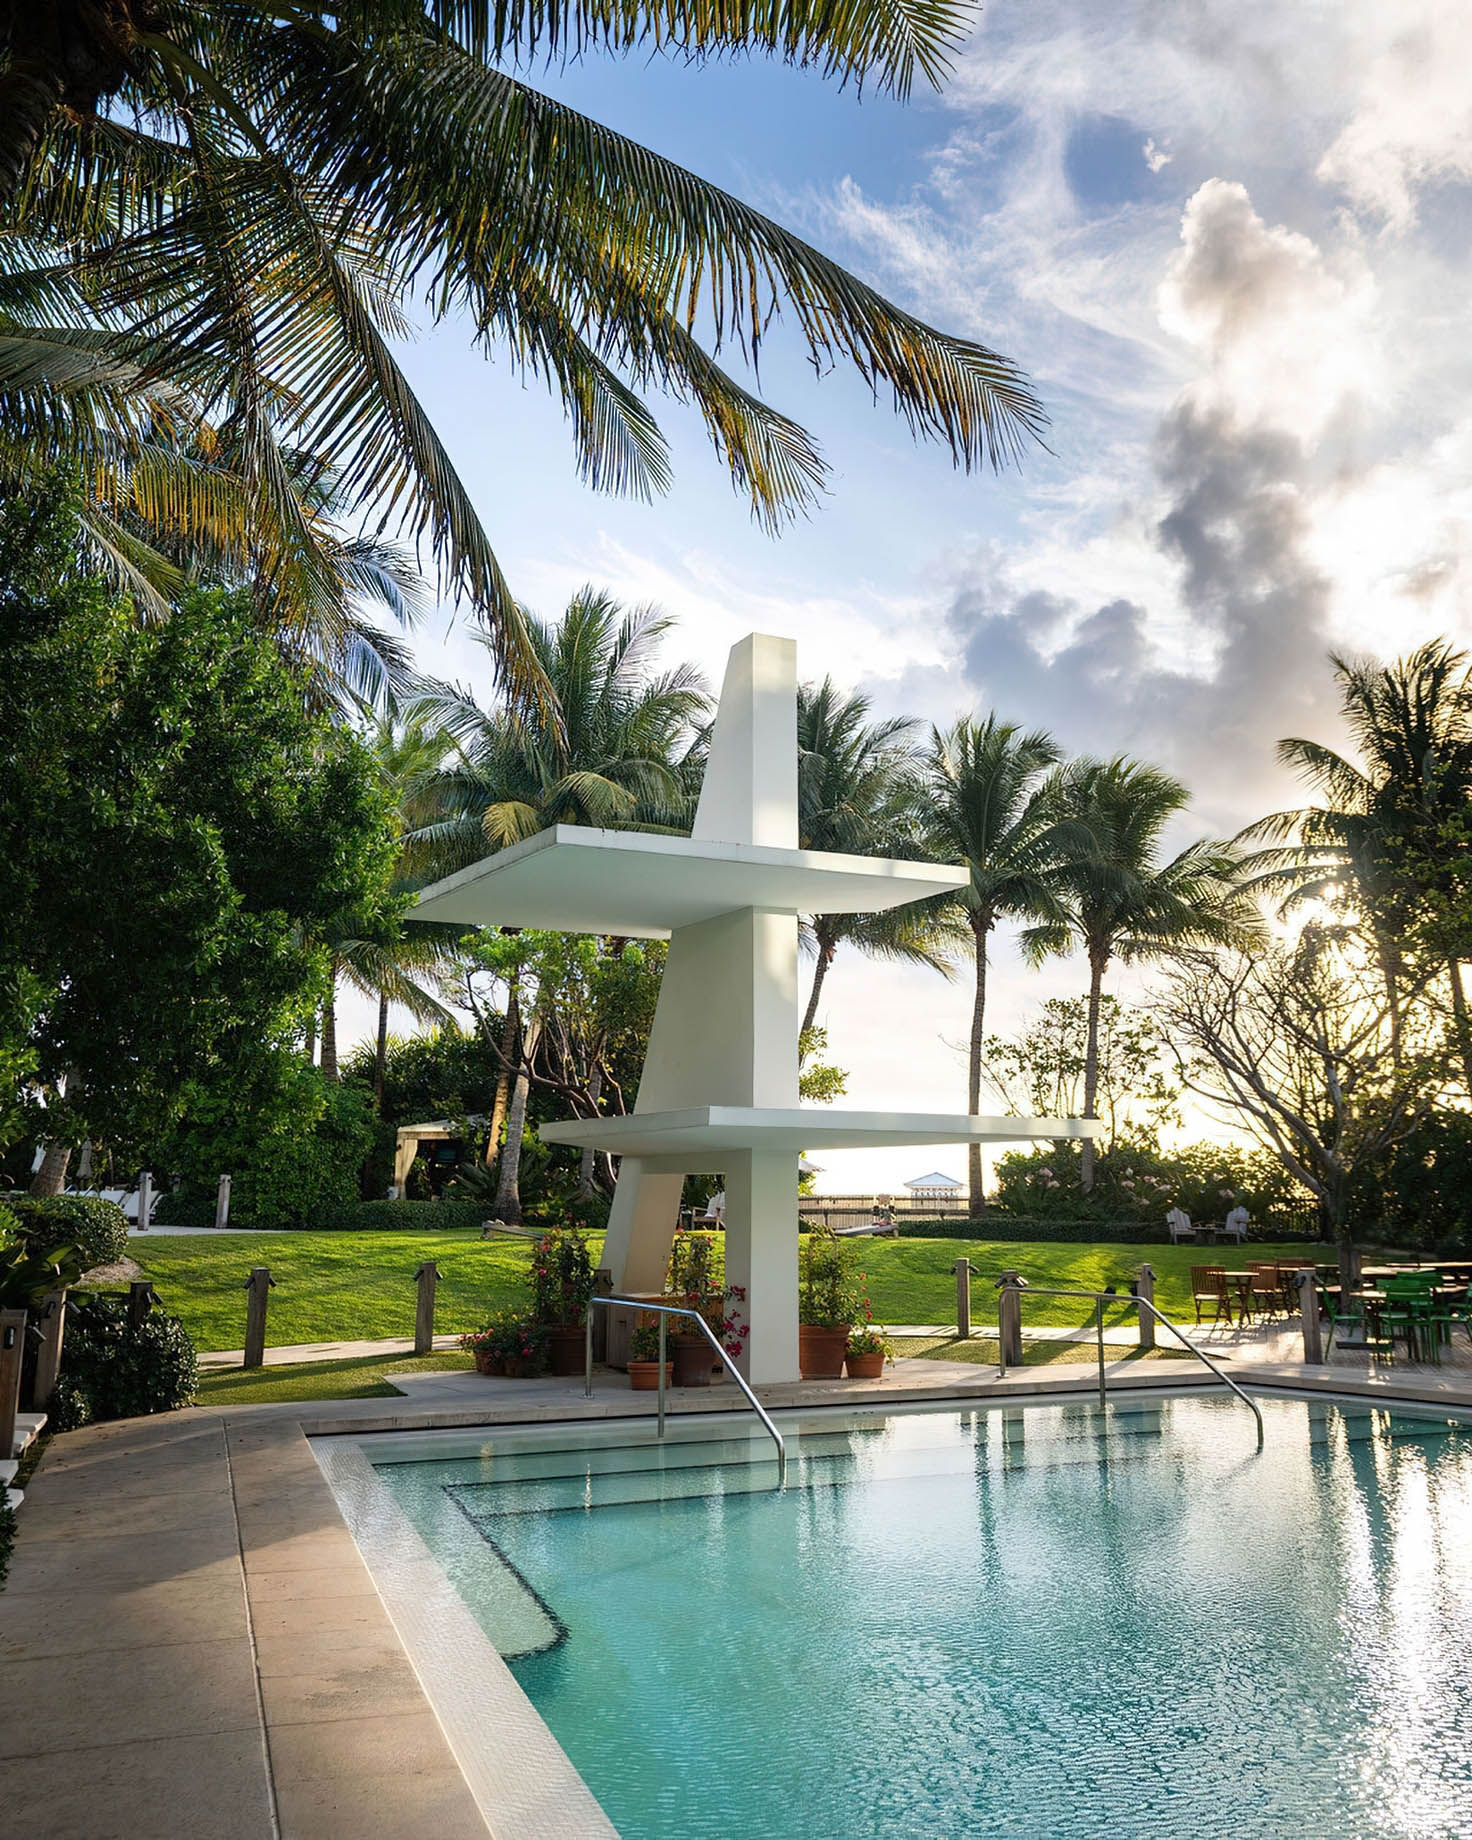 The Miami Beach EDITION Hotel - Miami Beach, FL, USA - Hotel Pool Deck